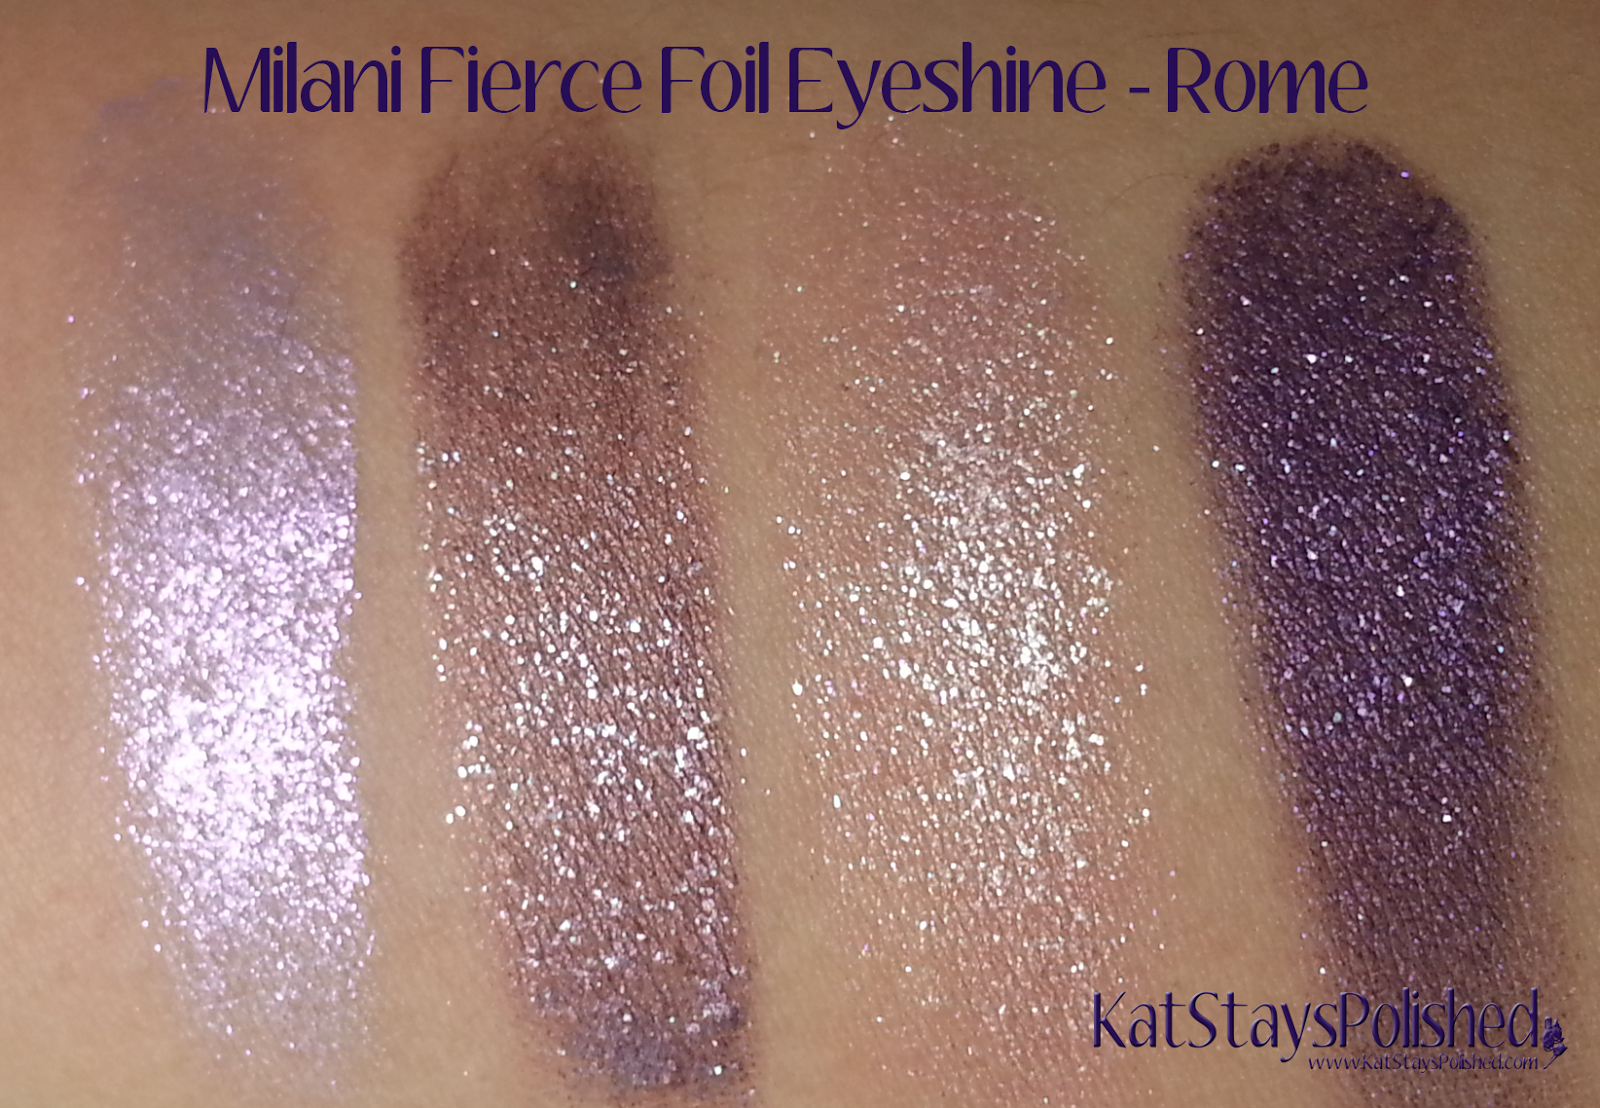 Milani Fierce Foil Eyeshine - Rome | Kat Stays Polished